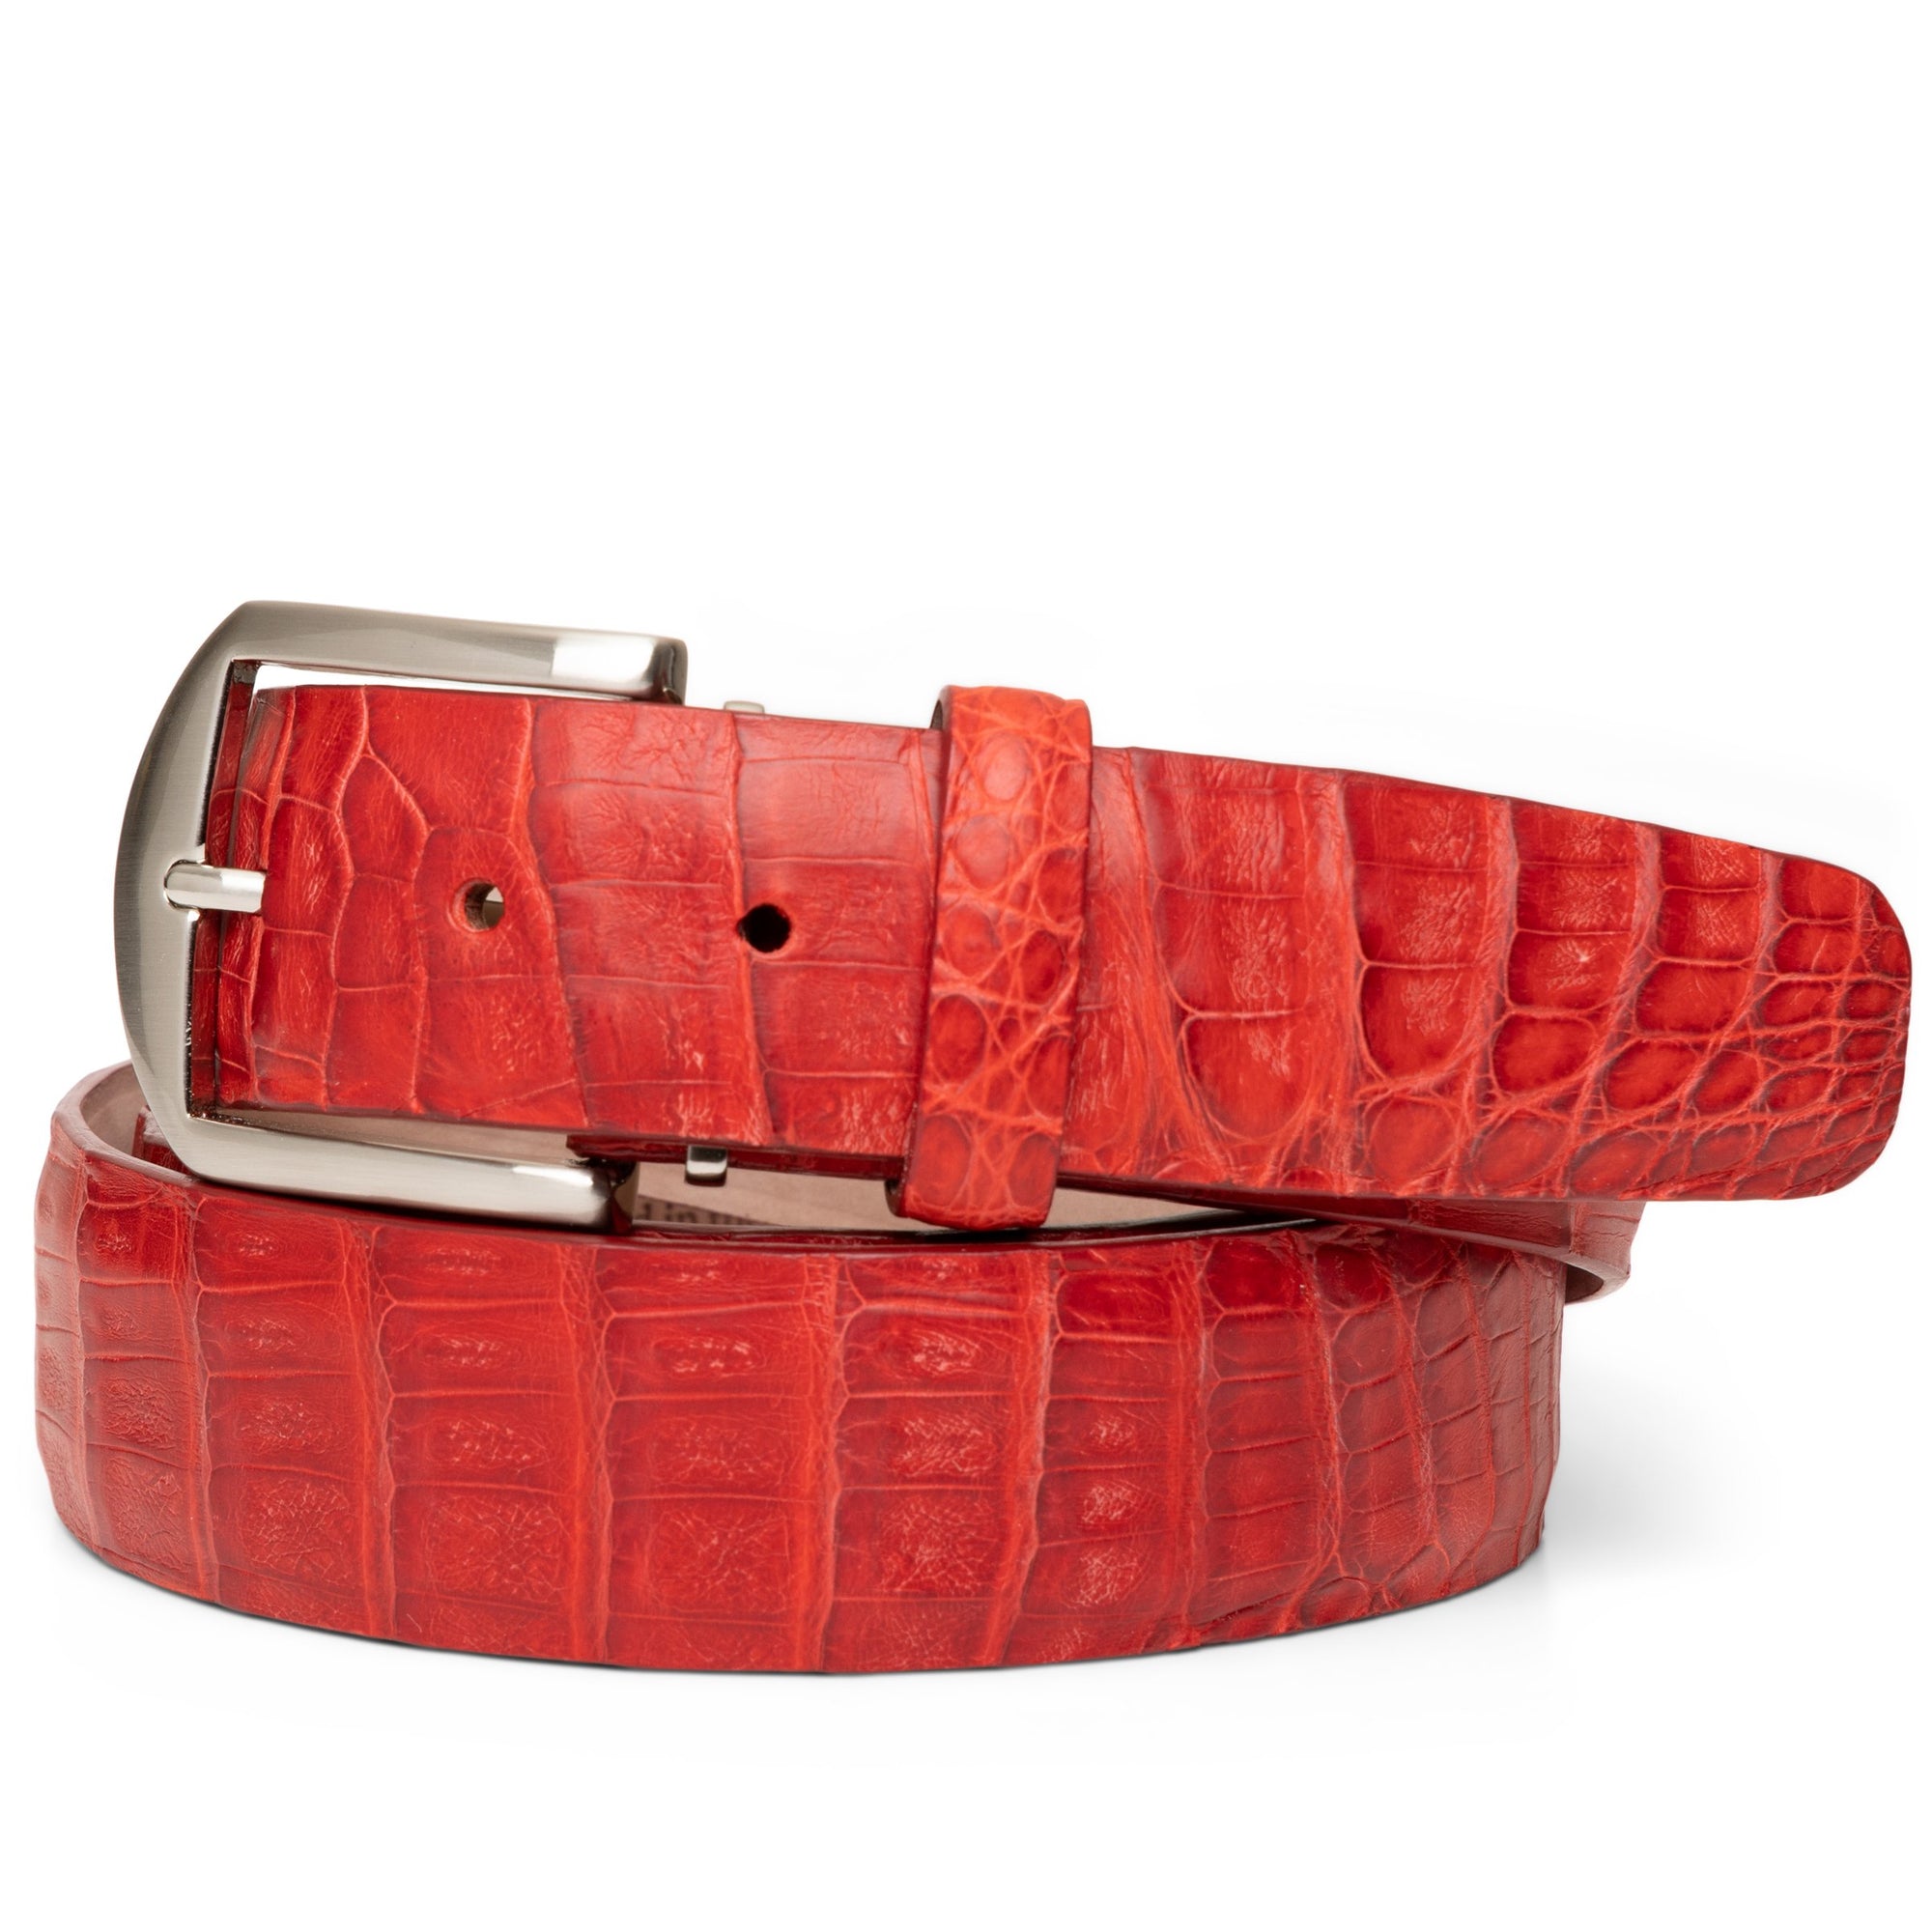 Genuine Caiman Crocodile Belt in Red by L.E.N.